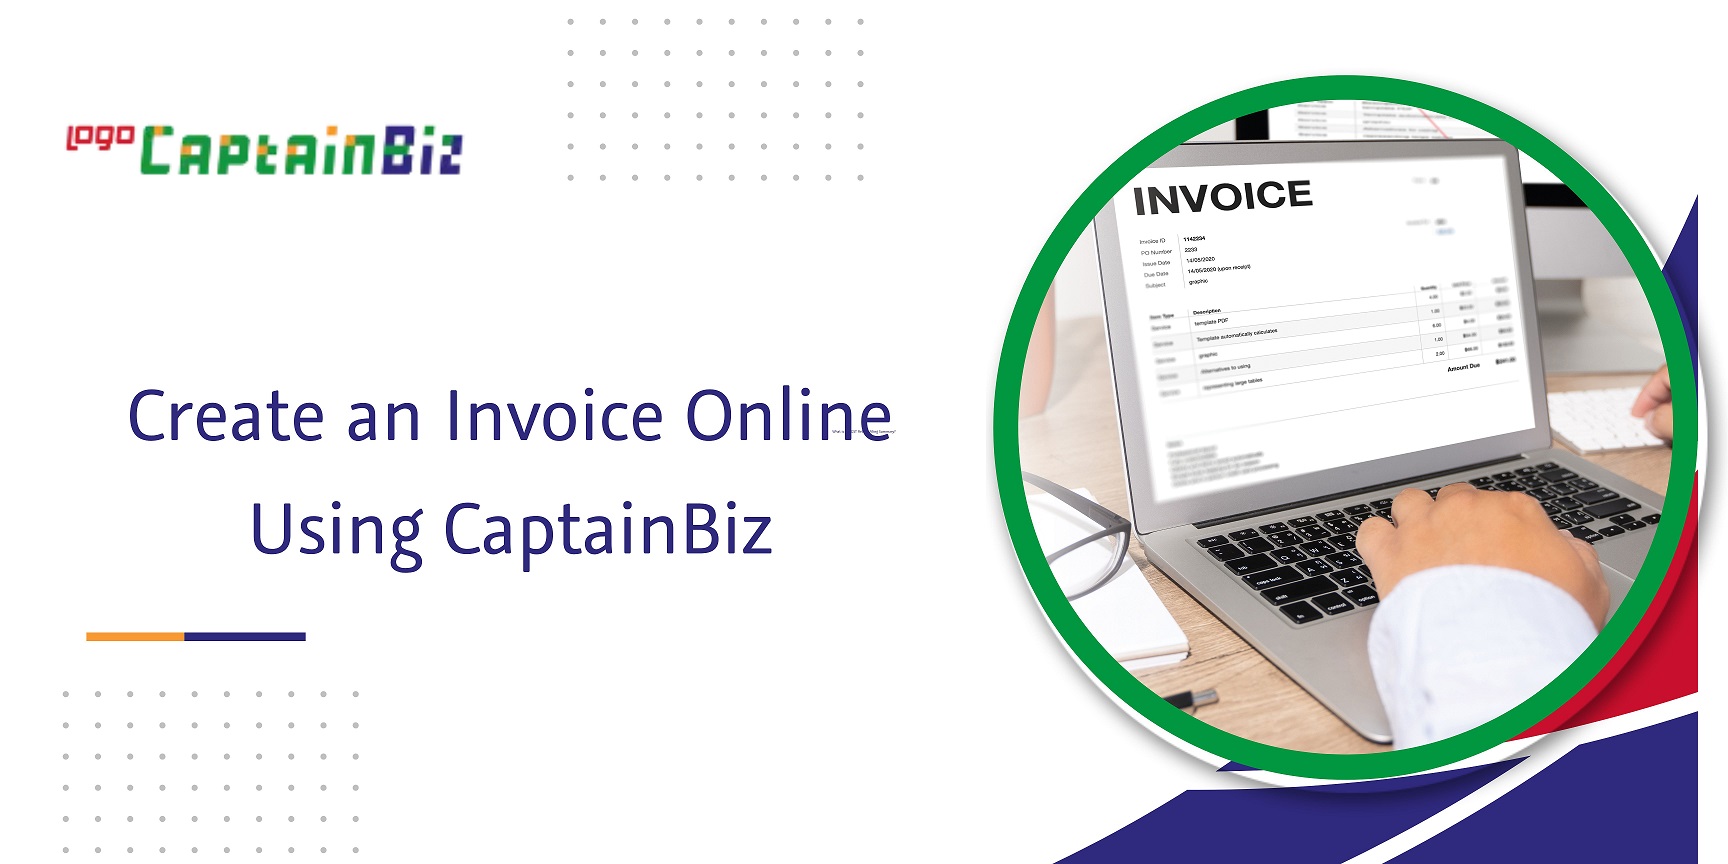 CaptanBiz: create an invoice online using captainbiz